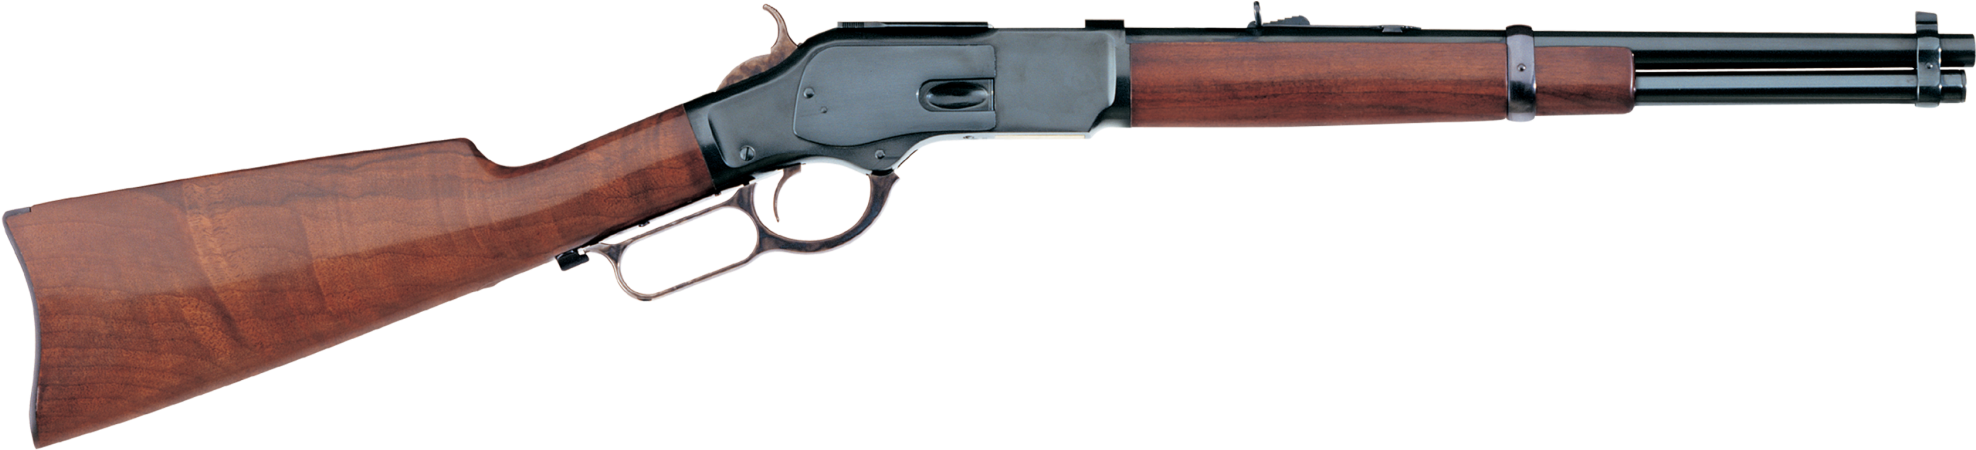 Uberti 1873 Trapper Rifle - 1873 Rifle (2000x704)